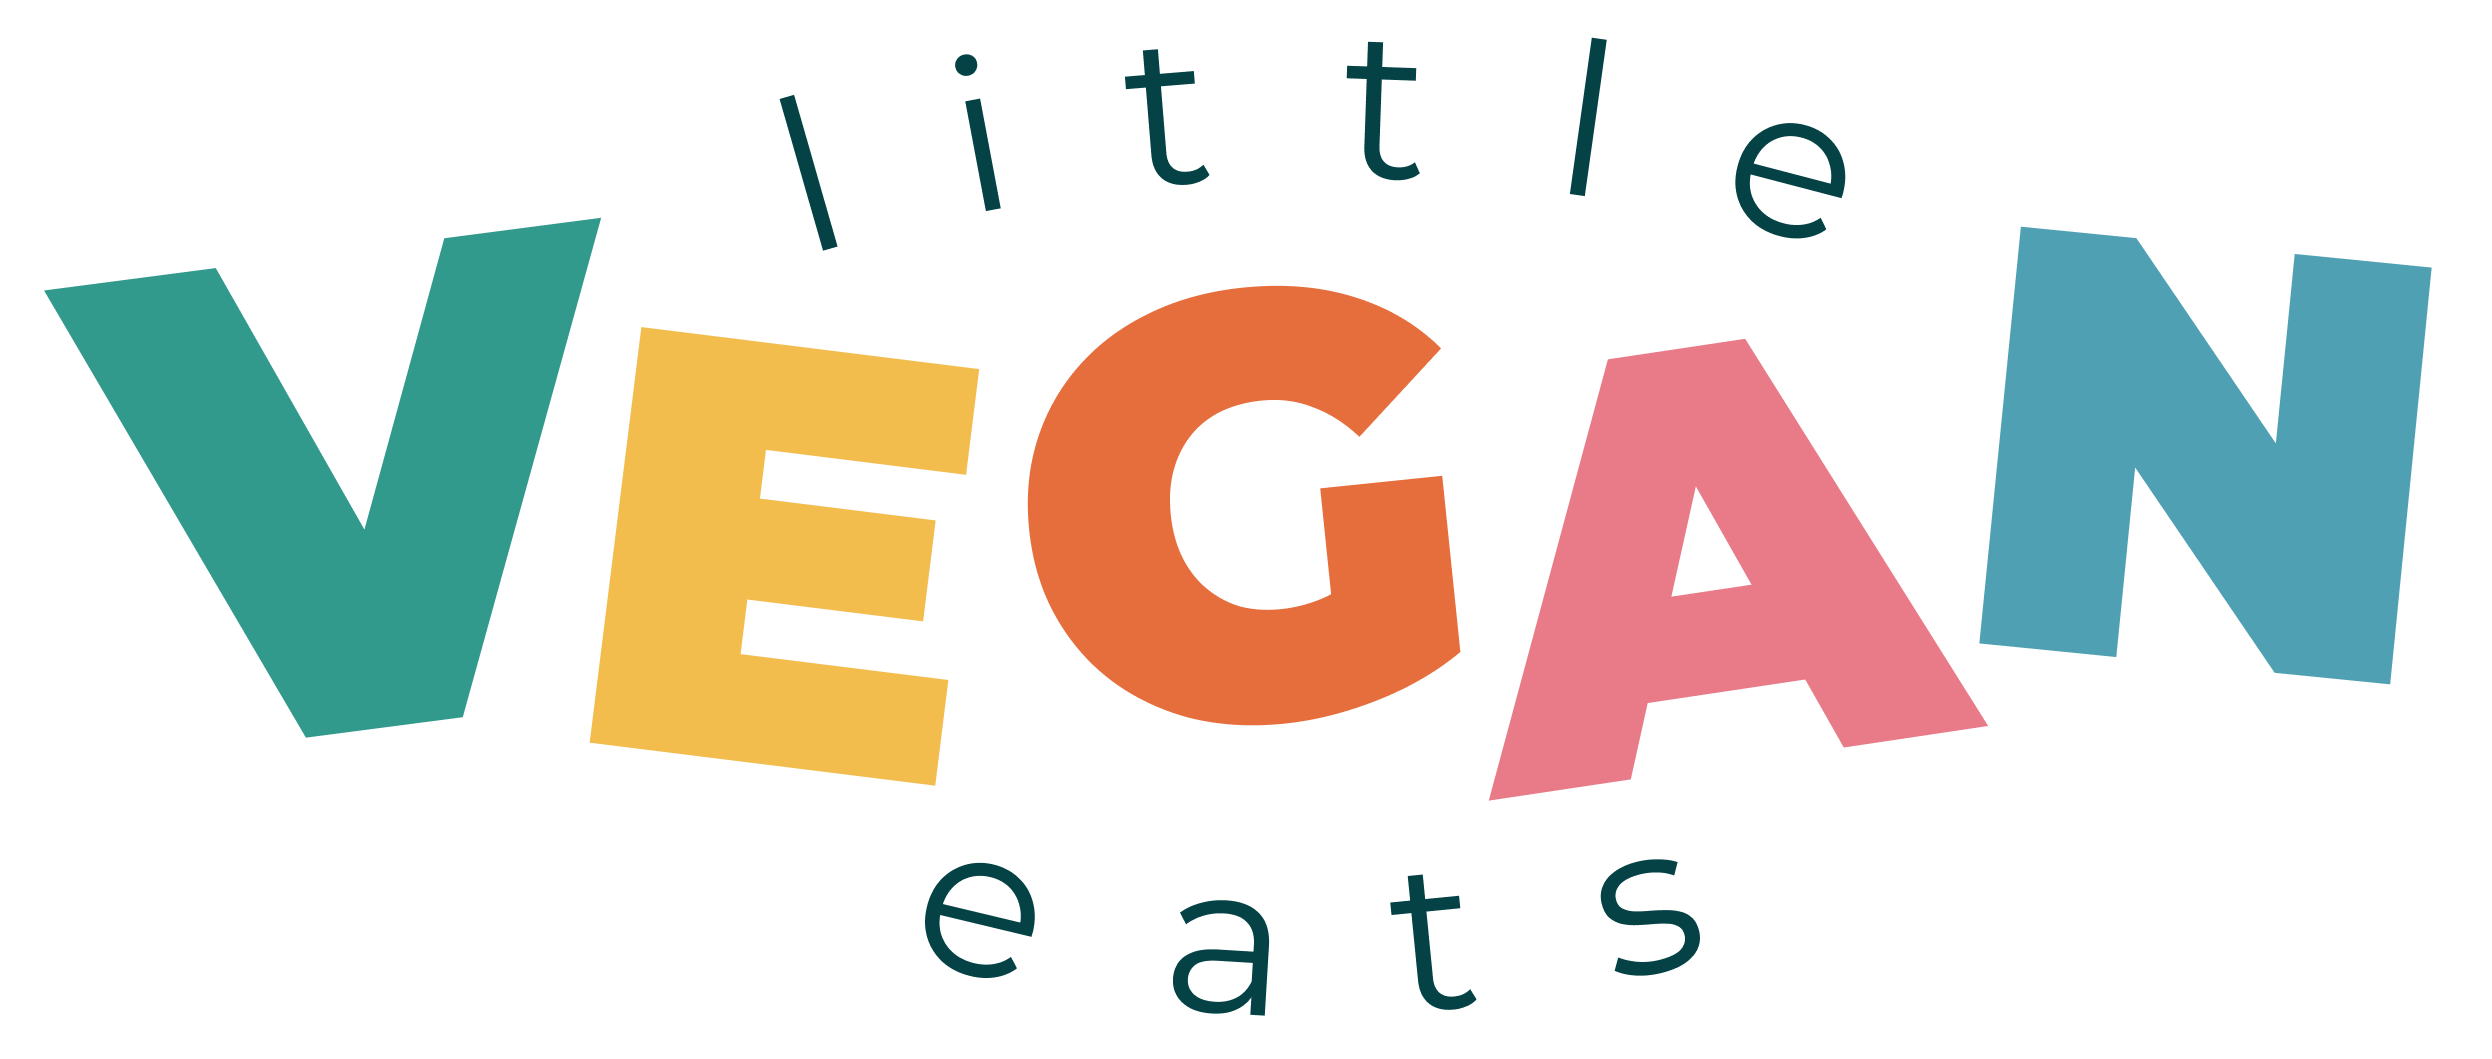 Little Vegan Eats